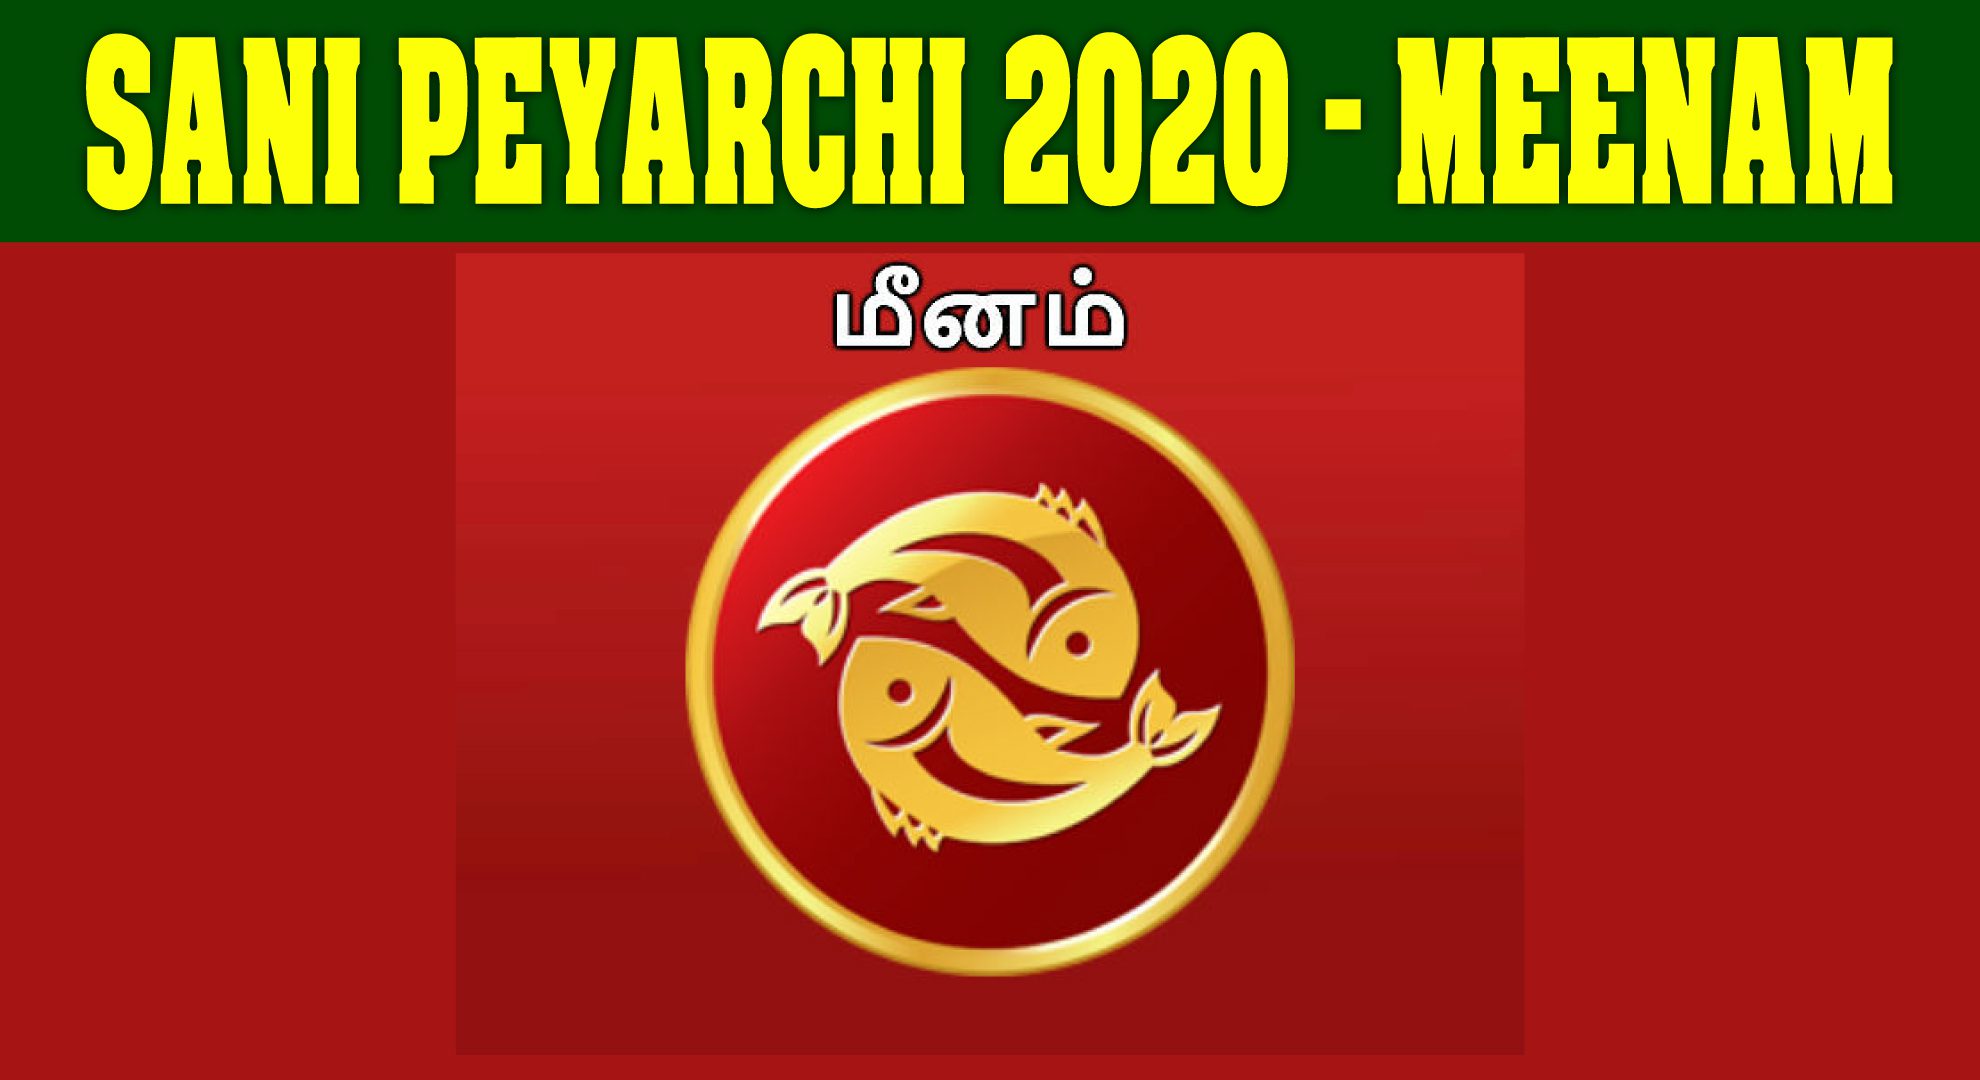 Sani Peyarchi 2020 | Sani Peyarchi 2020 Meenam | சனிப்பெயர்ச்சி 2020